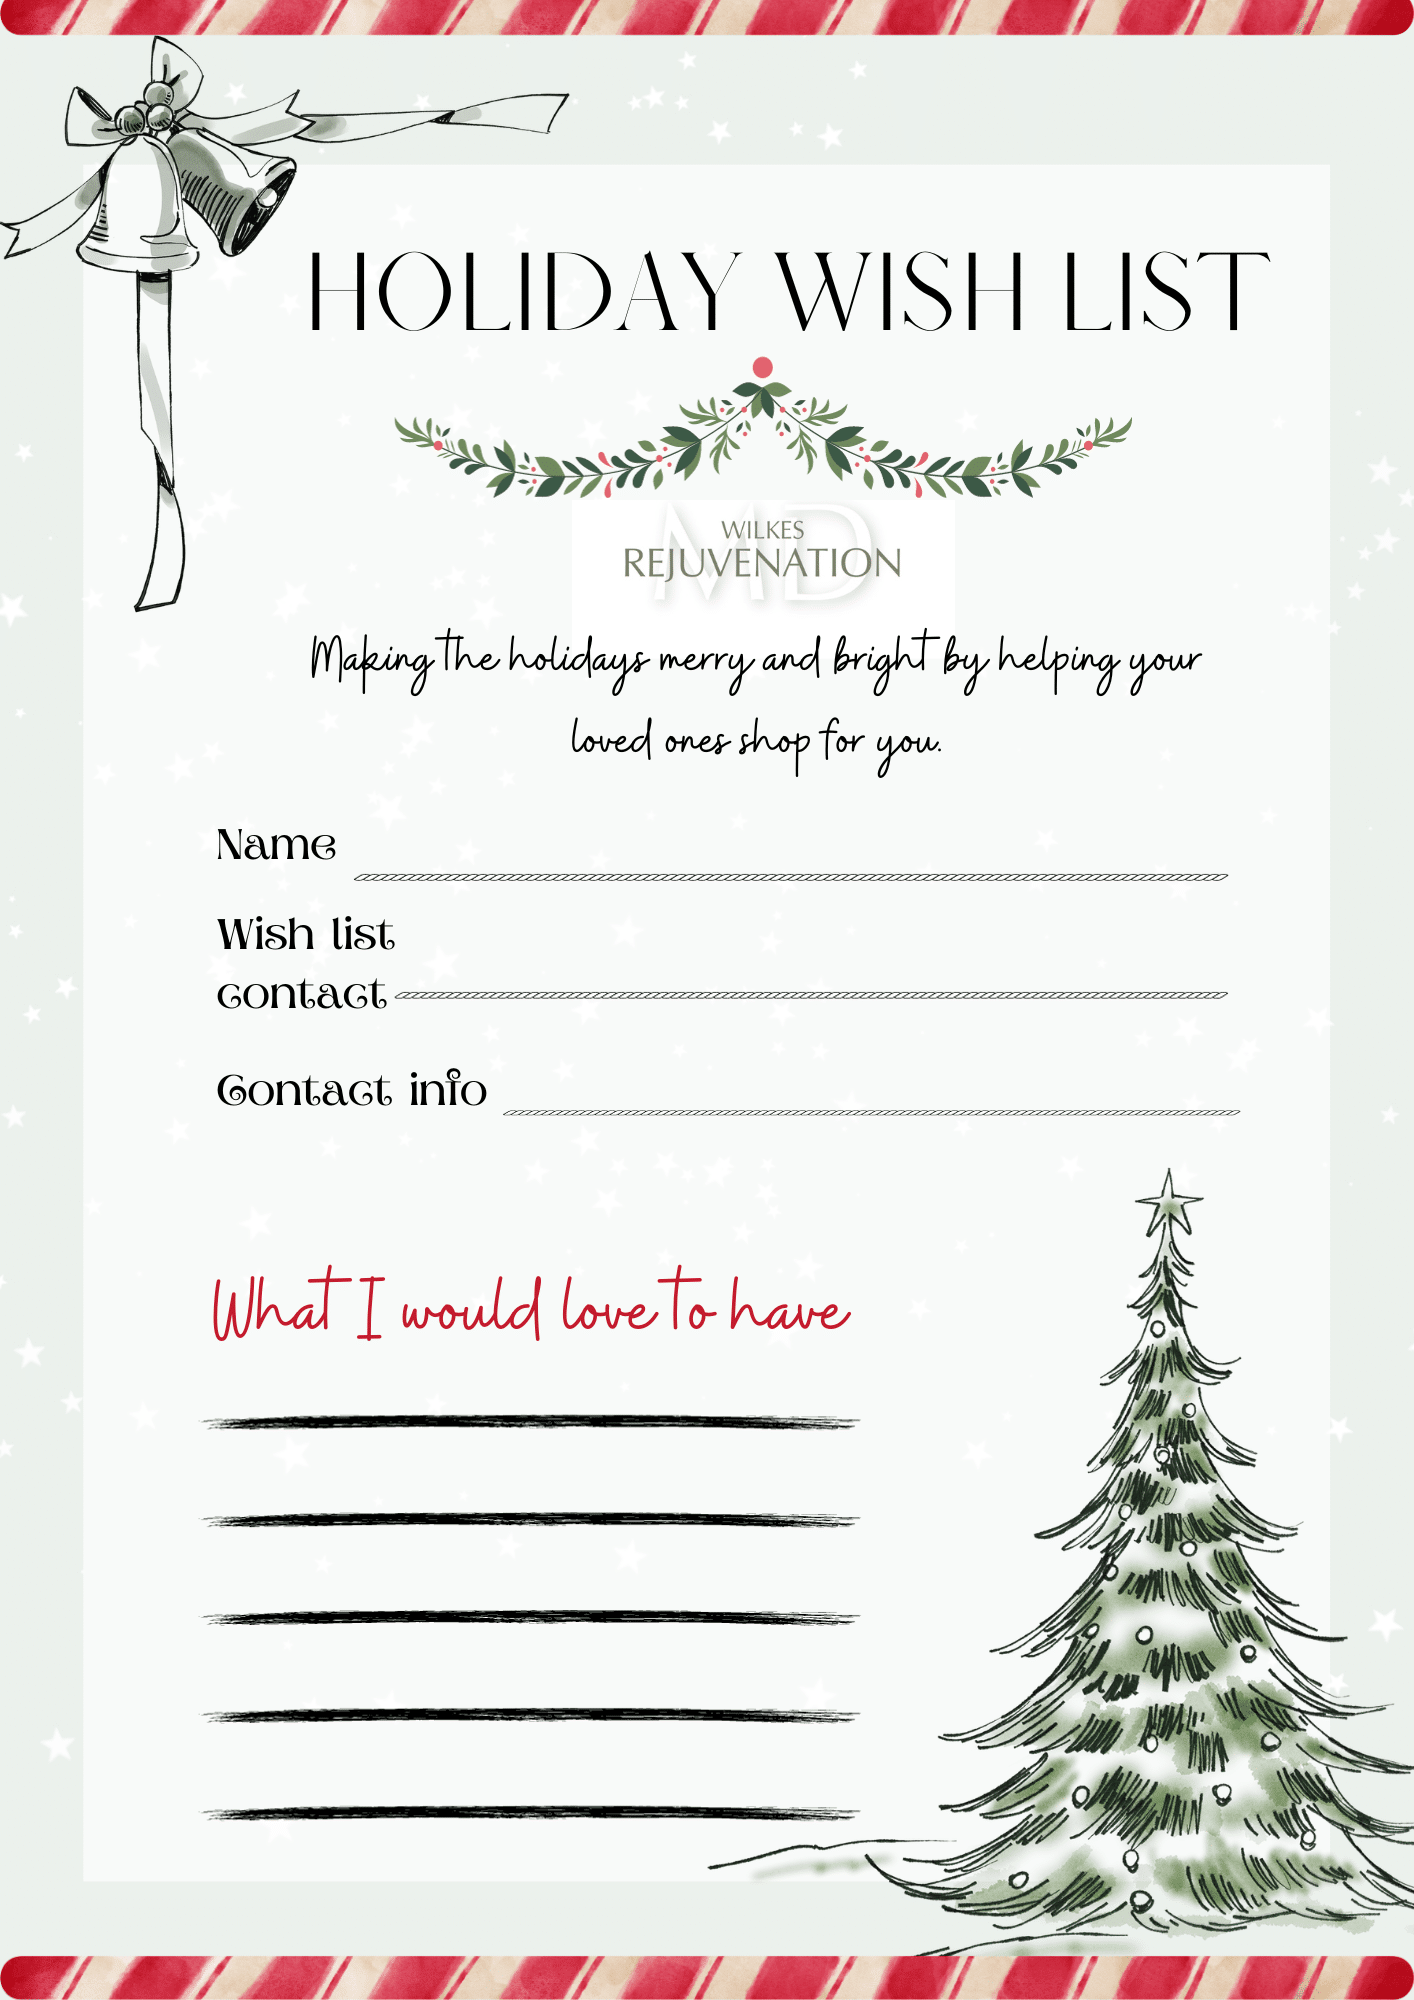 [Original size] Holiday wish list